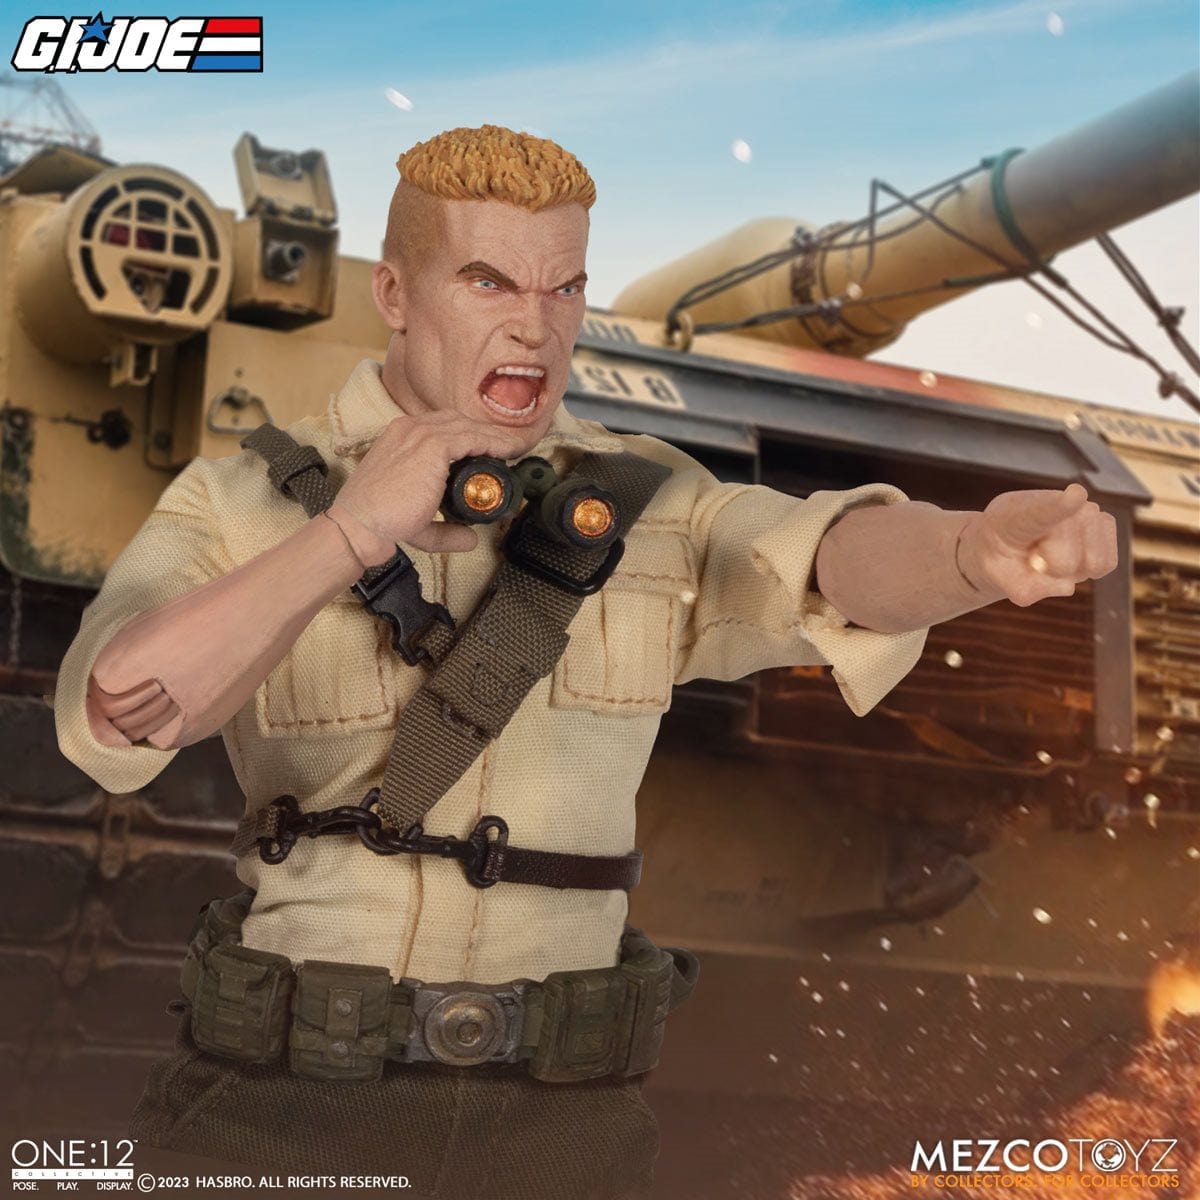 Mezco Toyz One:12 Collective G.I. Joe Duke Deluxe Edition Action Figure